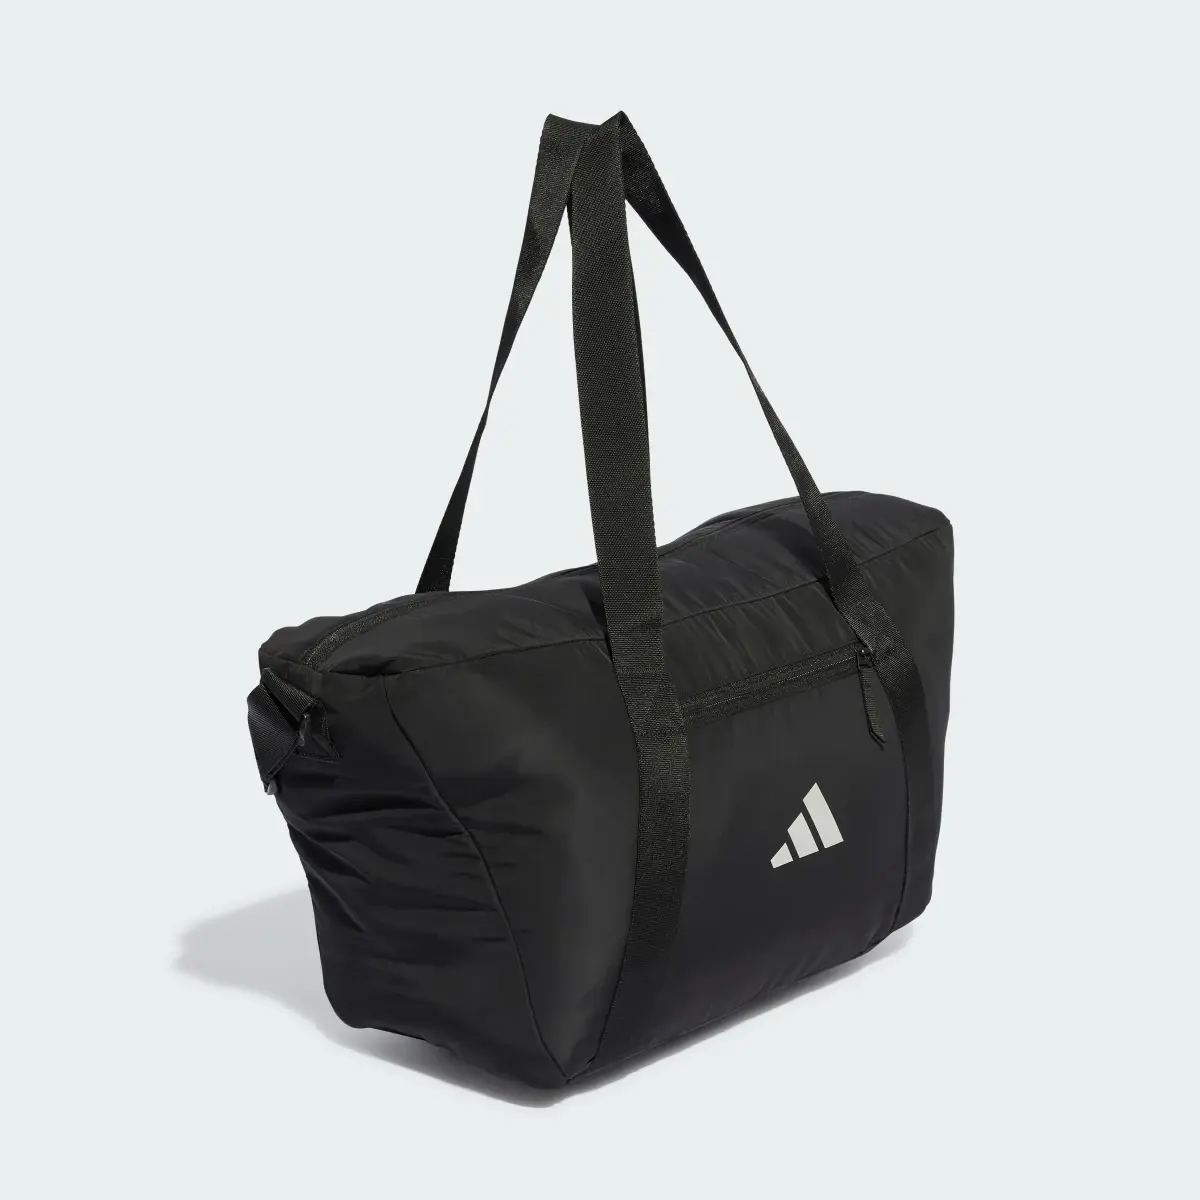 Adidas Sport Bag. 2